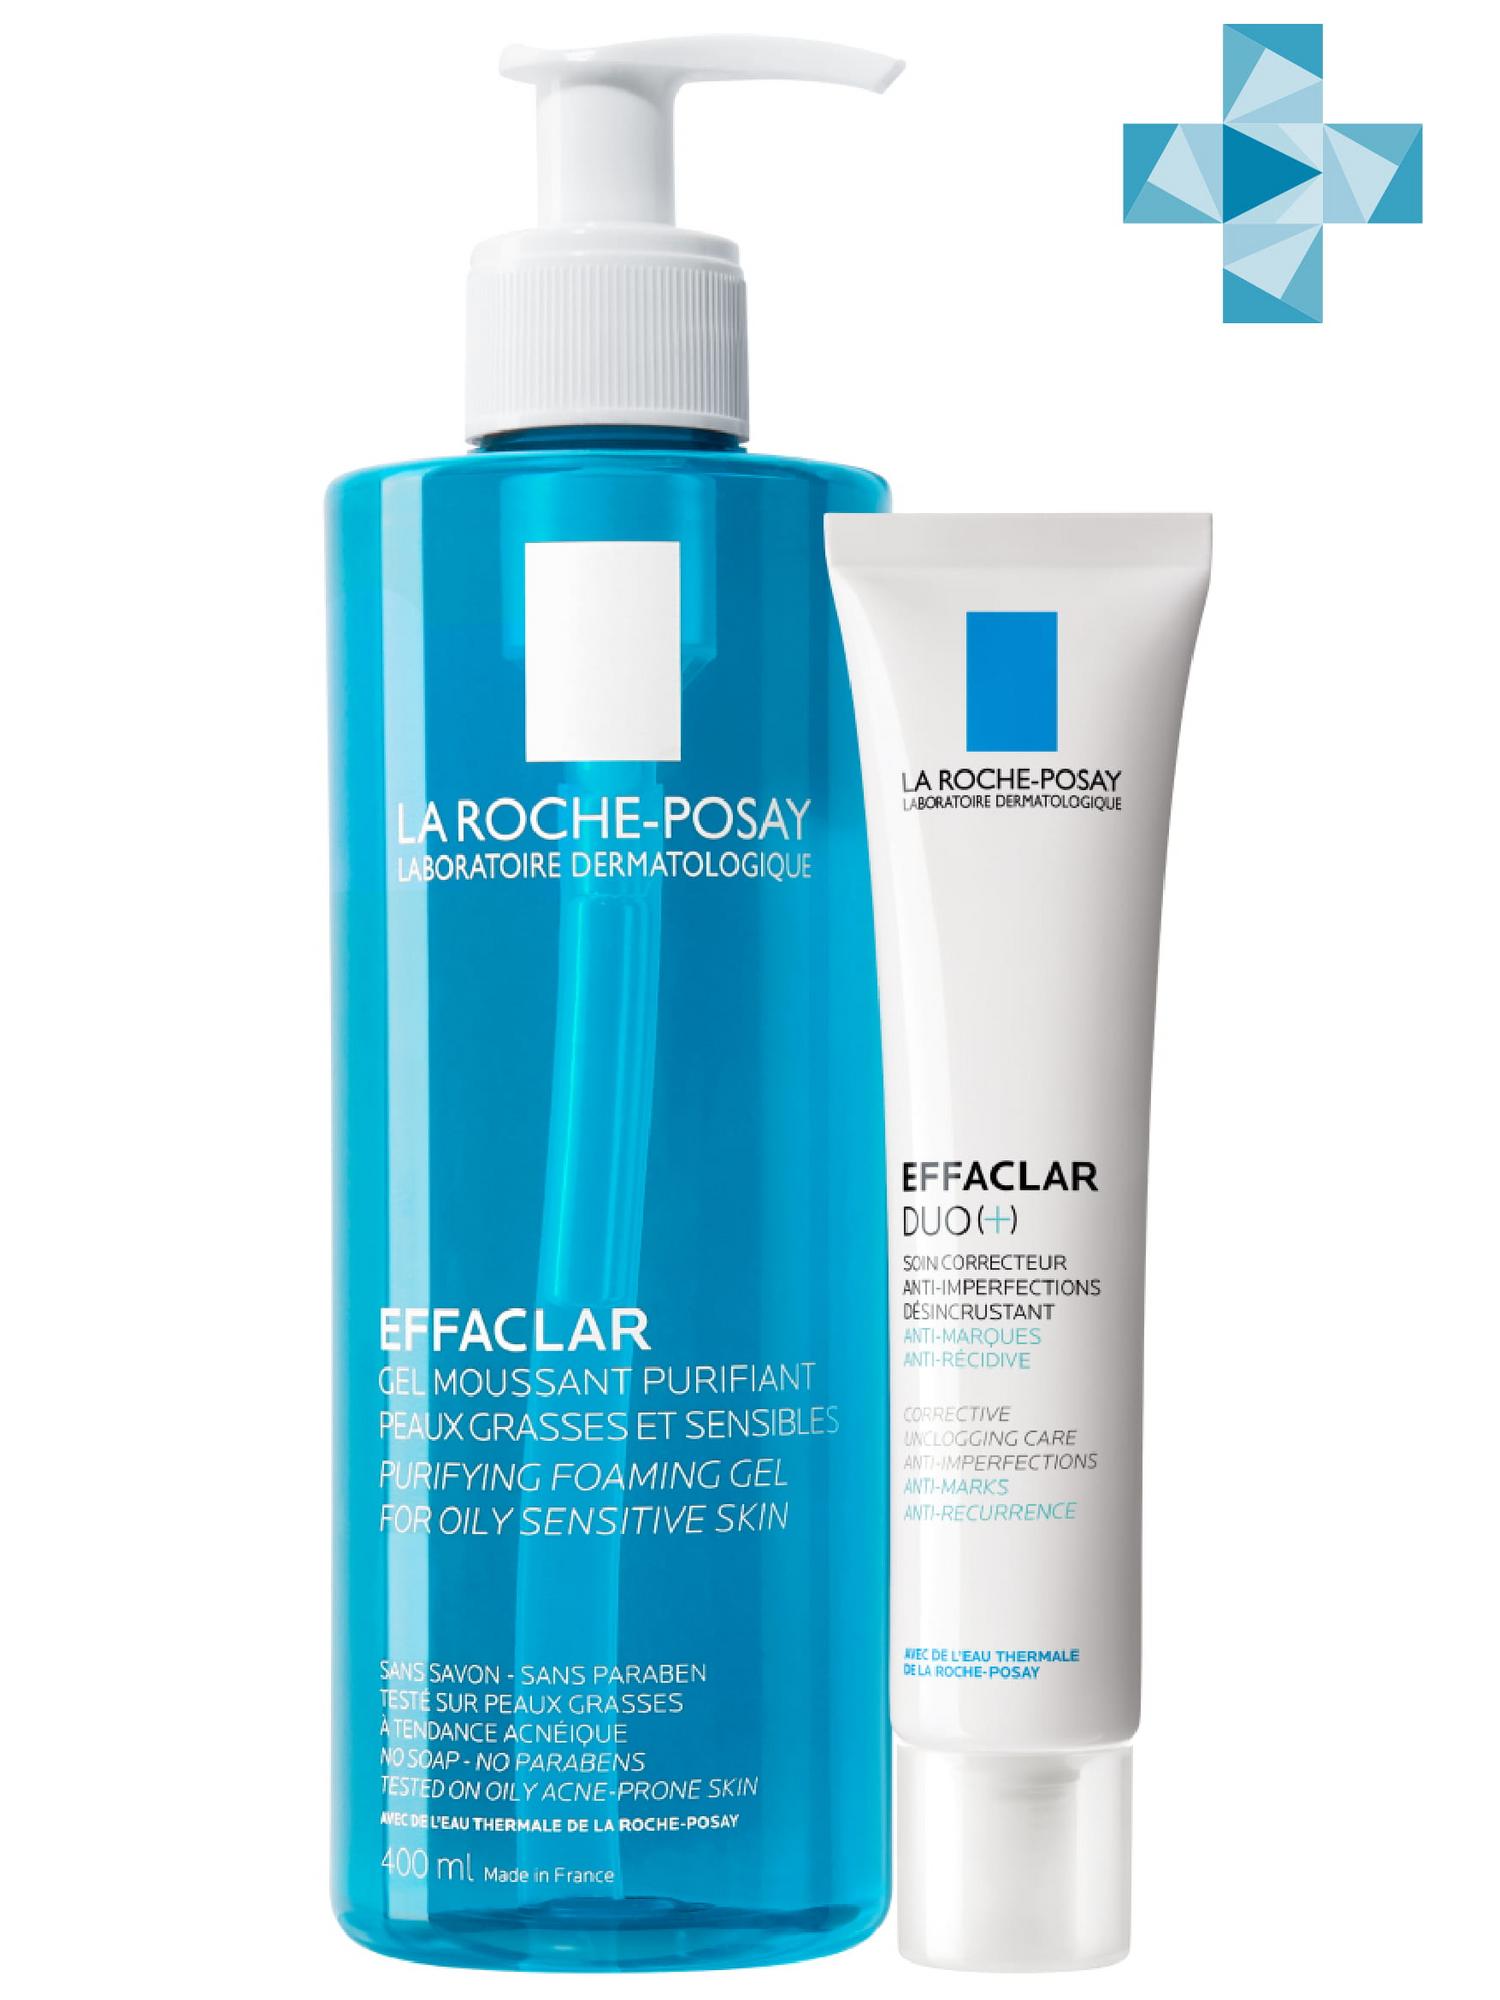 La Roche-Posay Комплект: Корректирующий крем-гель Duo[+] для проблемной кожи, 40 мл + Очищающий гель, 400 мл (La Roche-Posay, Effaclar)